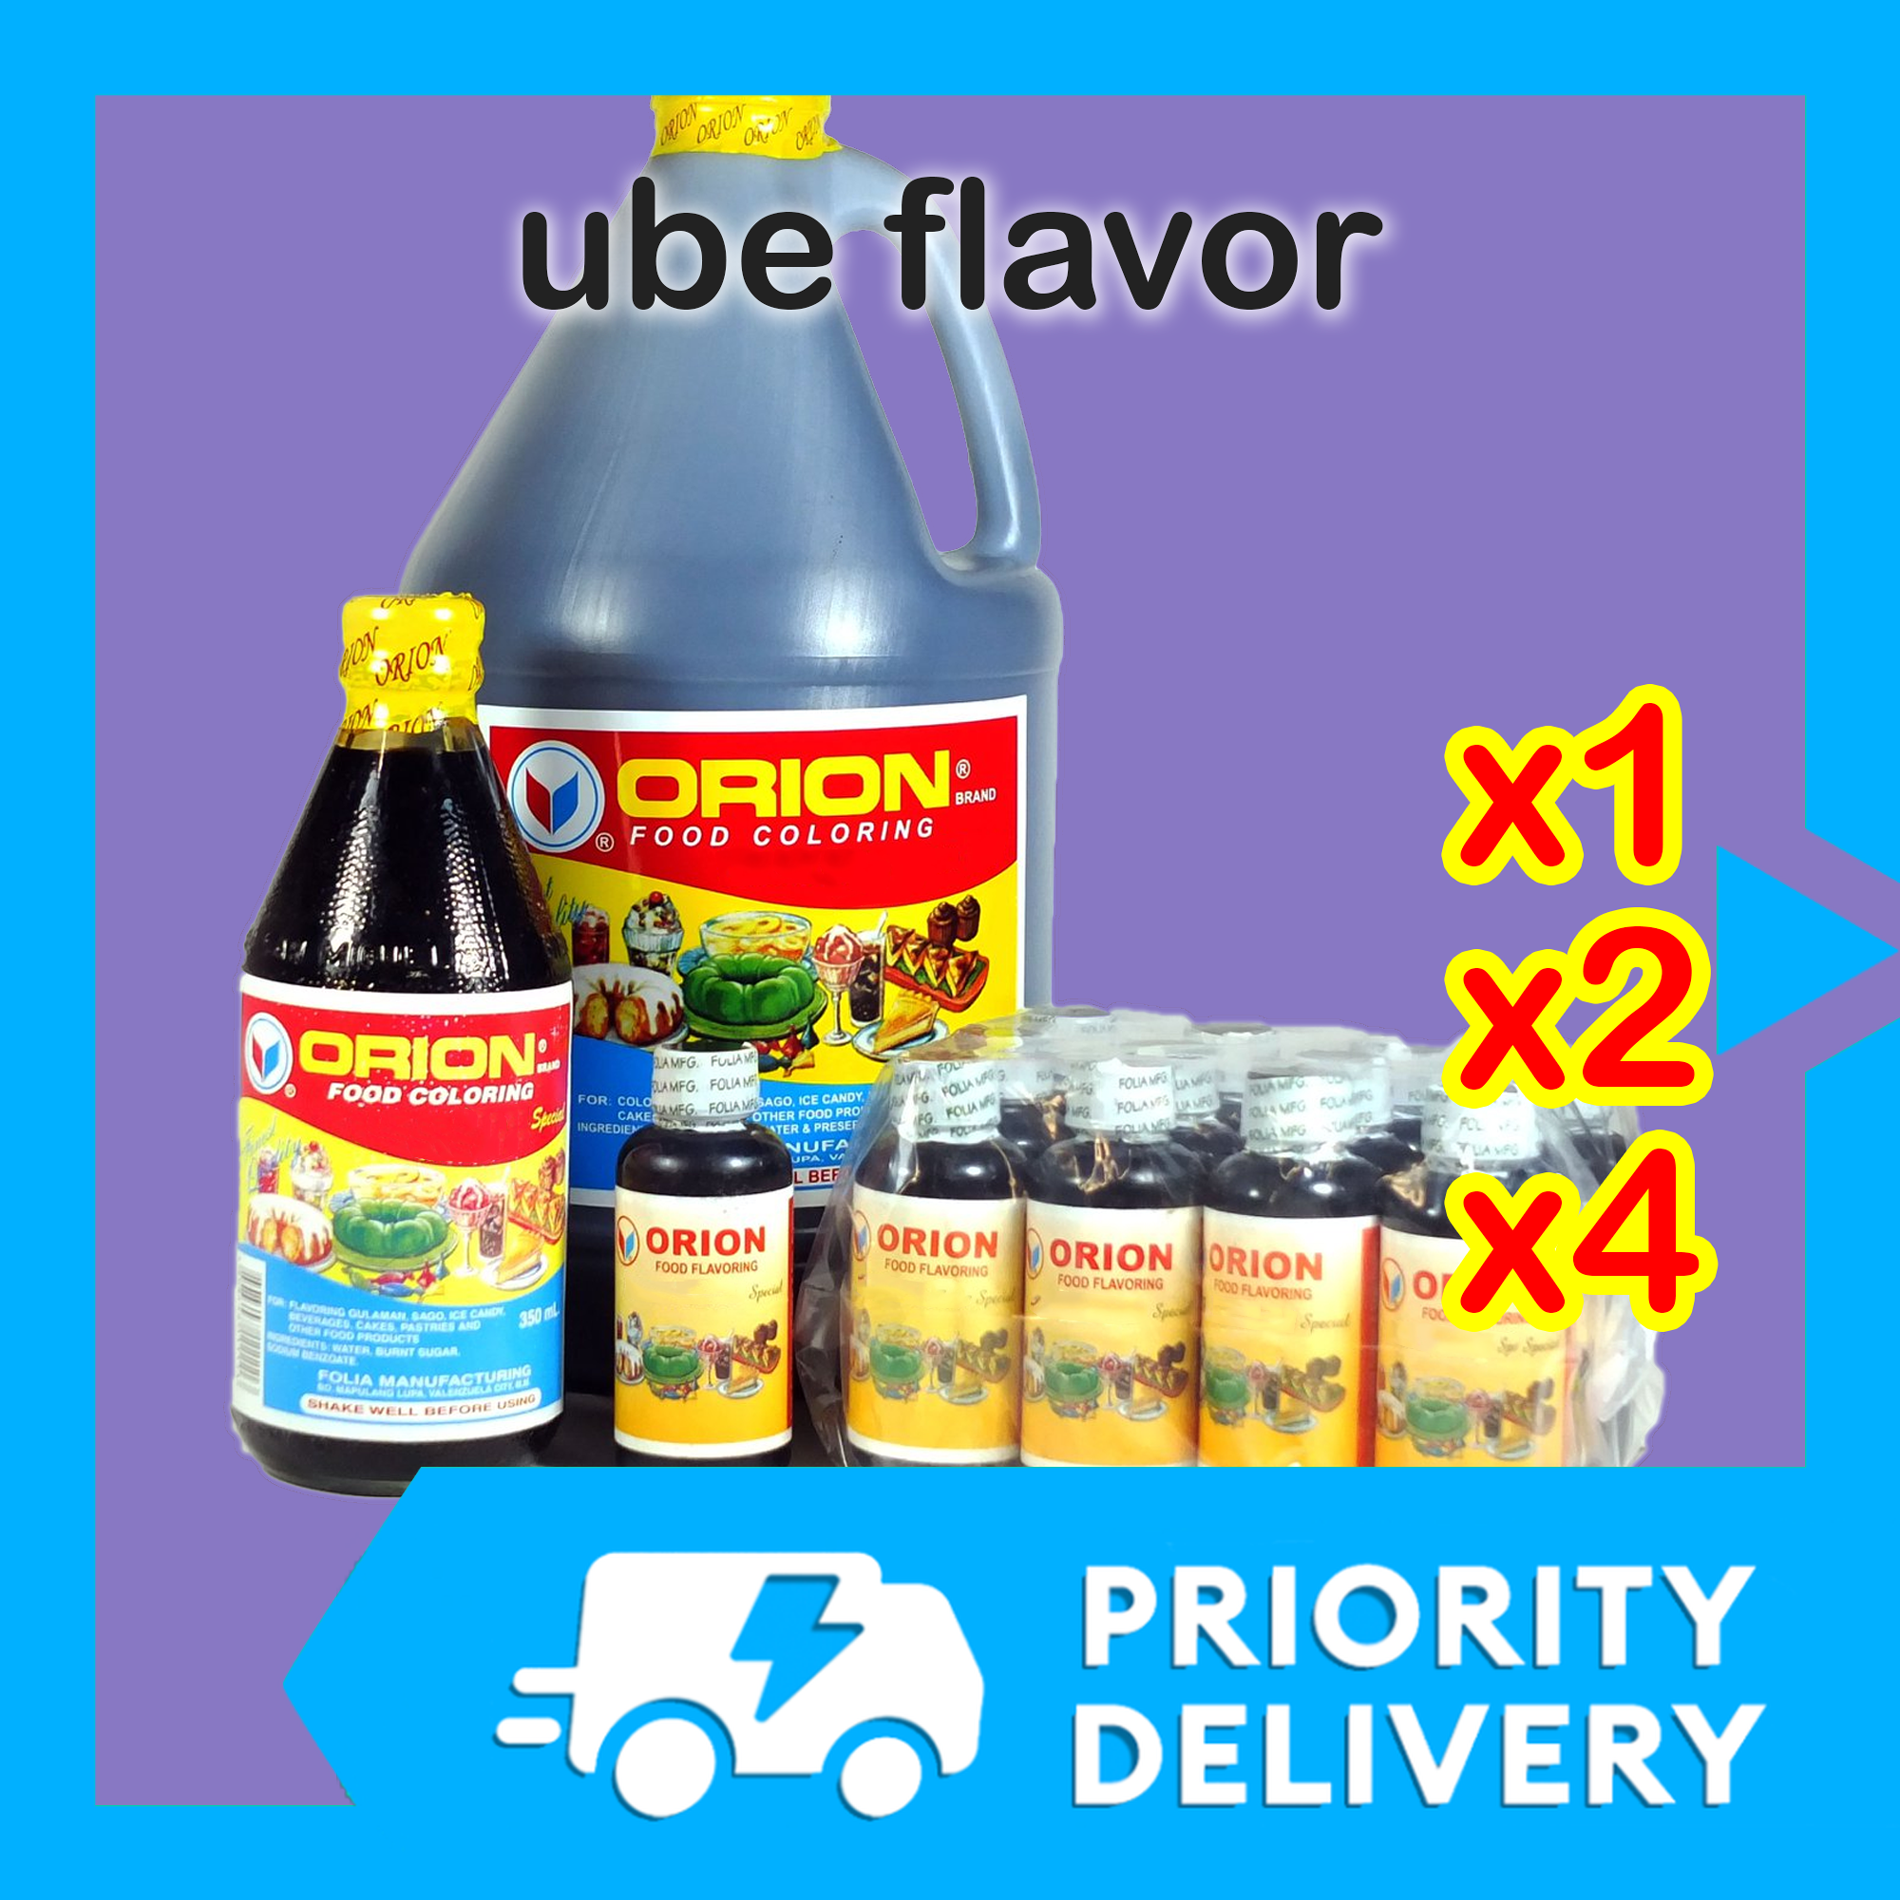 Bulacan Lye Water Lihiya 24x317ml UPC: - Uno Foods